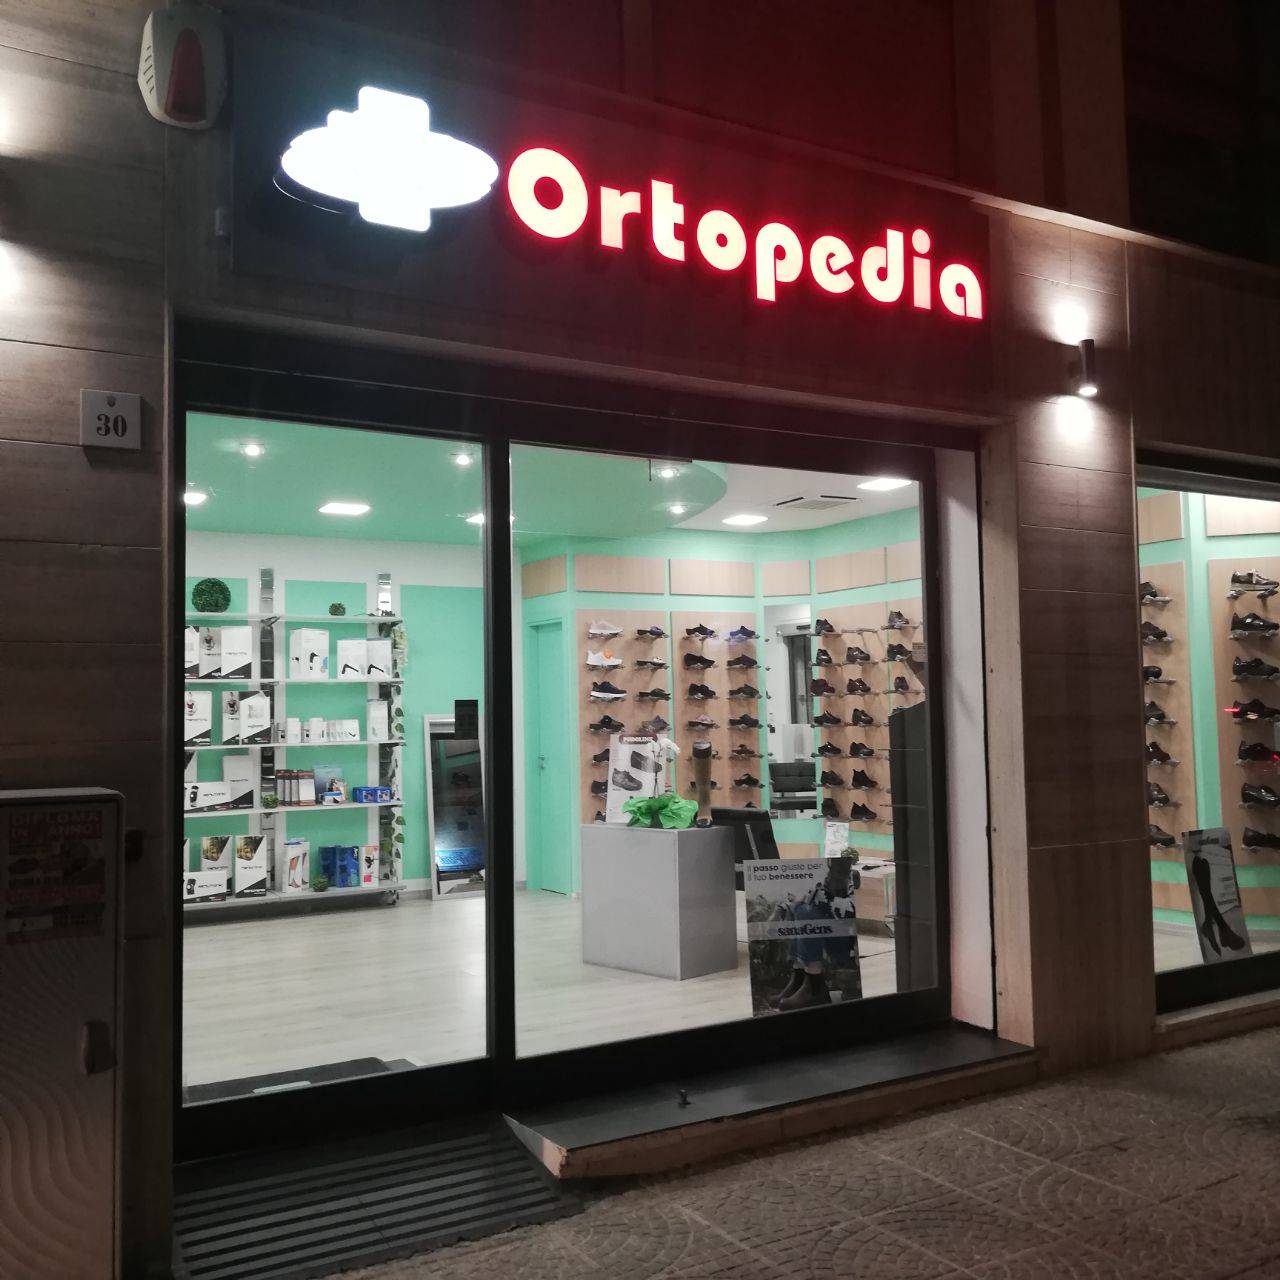 OTR Ortopedia Sanitaria - Punto vendita di Alghero - Sardegna